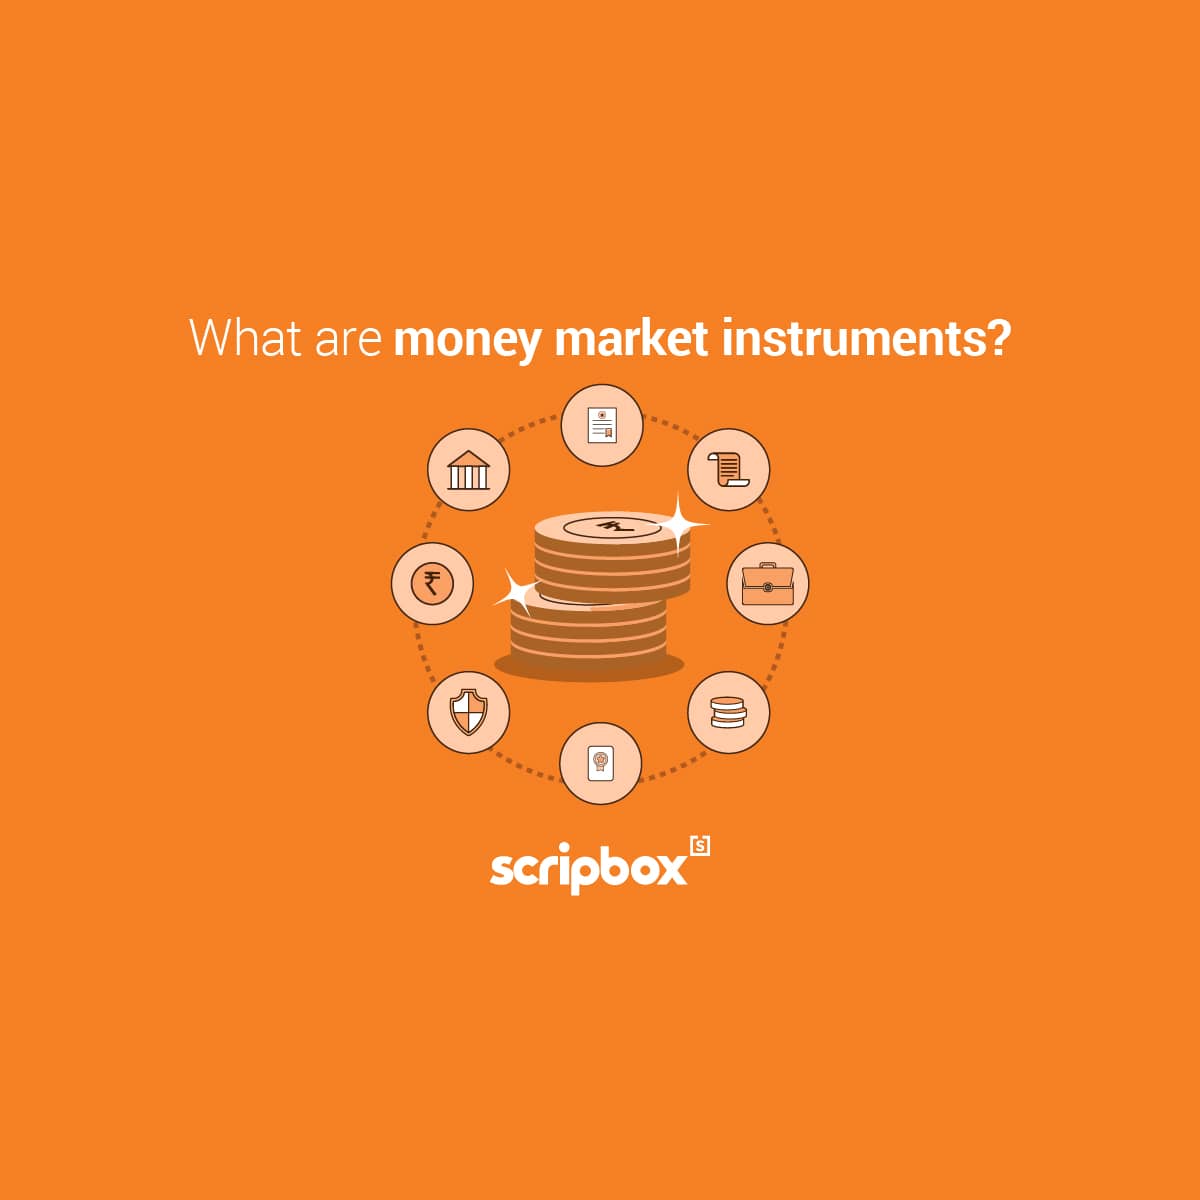 instruments in money market